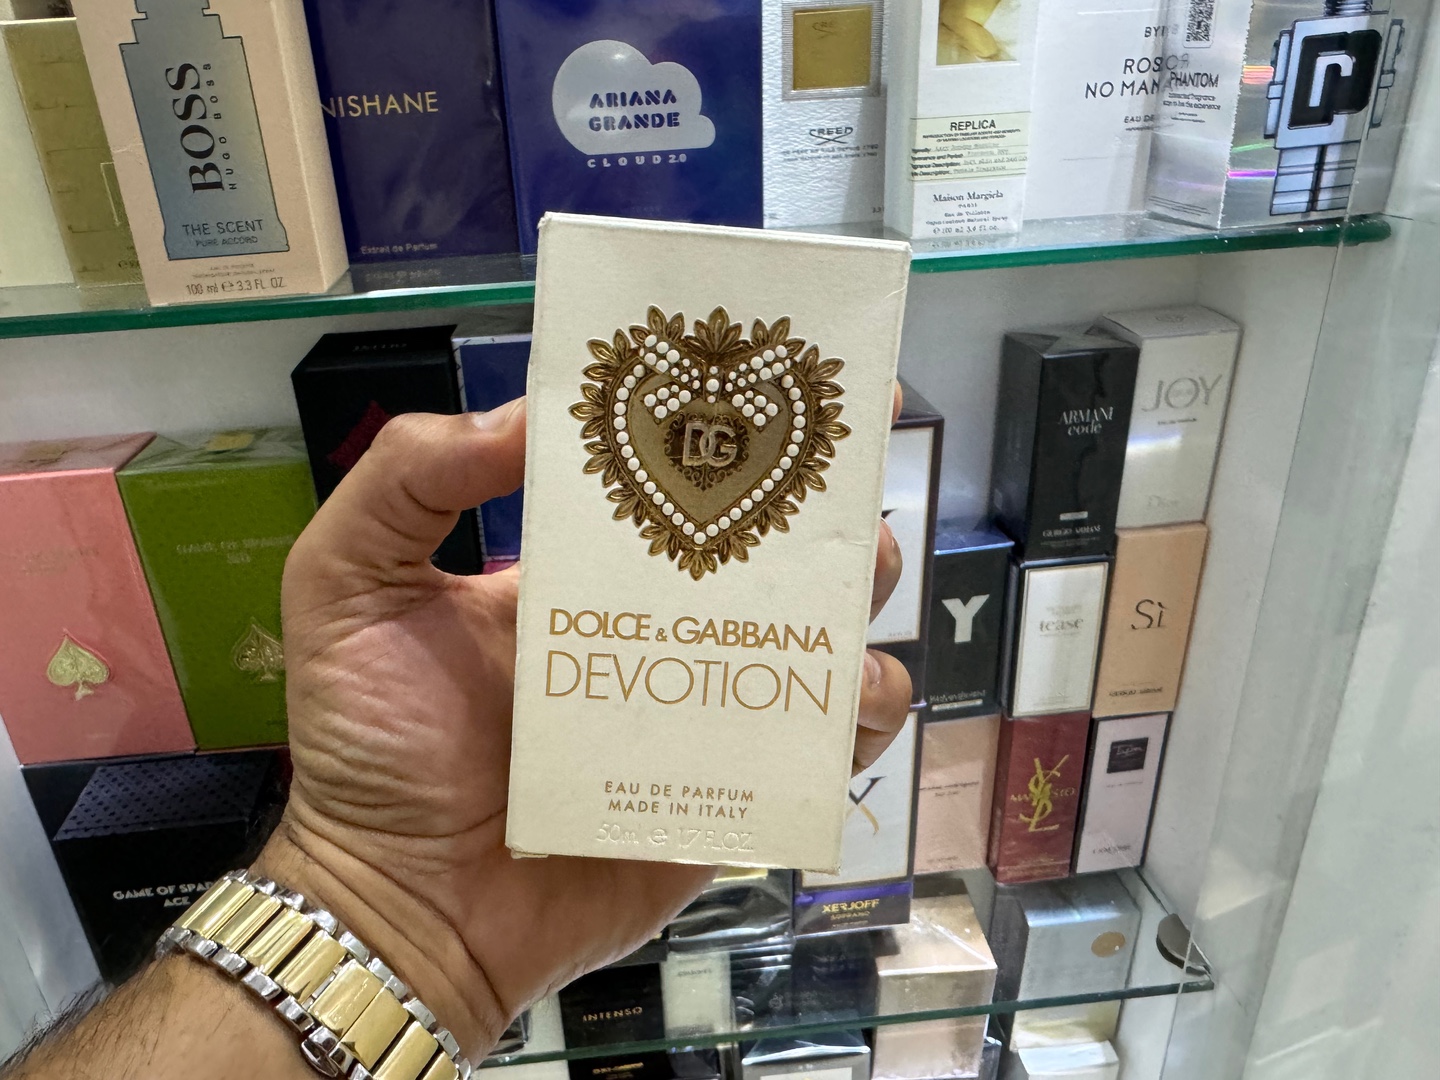 joyas, relojes y accesorios - Perfume Dolce & Gabbana Devotion EDP 50ml Parfum Original, RD$ 6,500 NEG